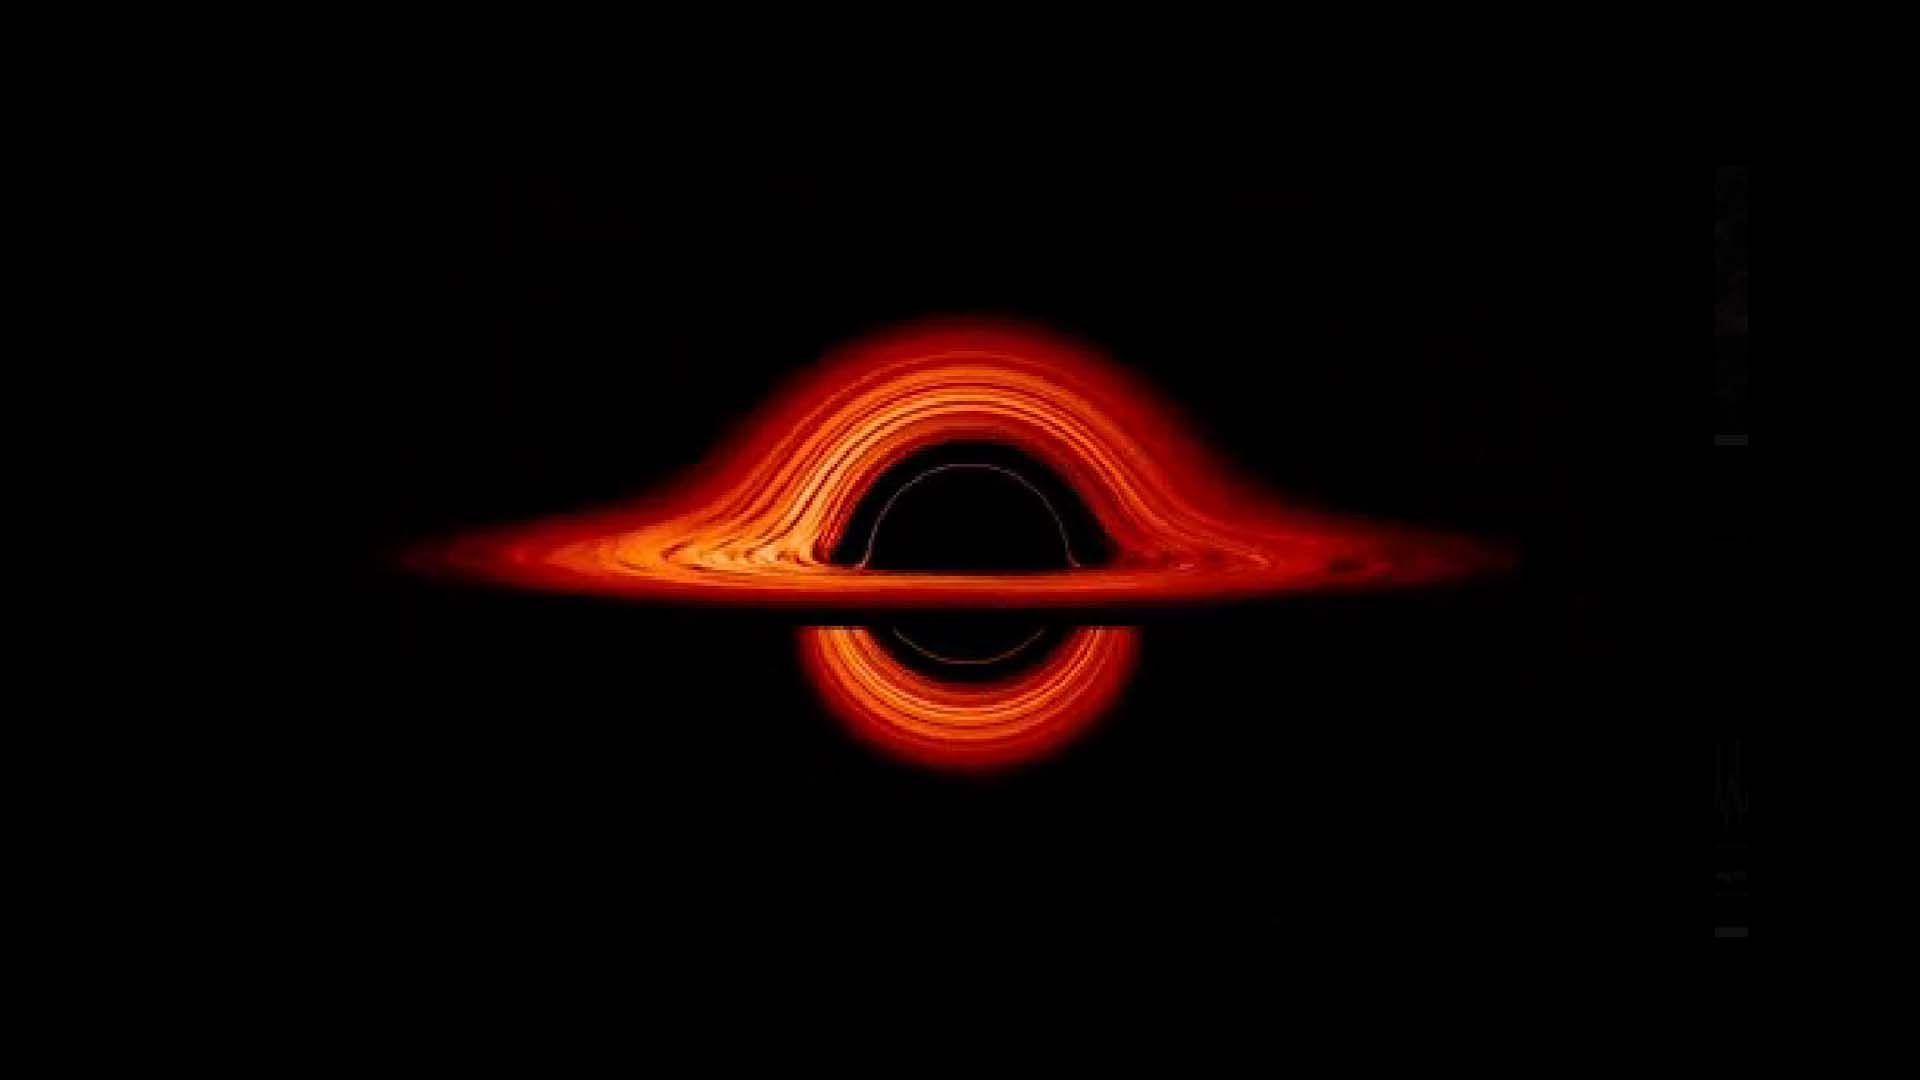 Astronomers analyze supermassive red black hole (Image via X/ @NASAWebb)